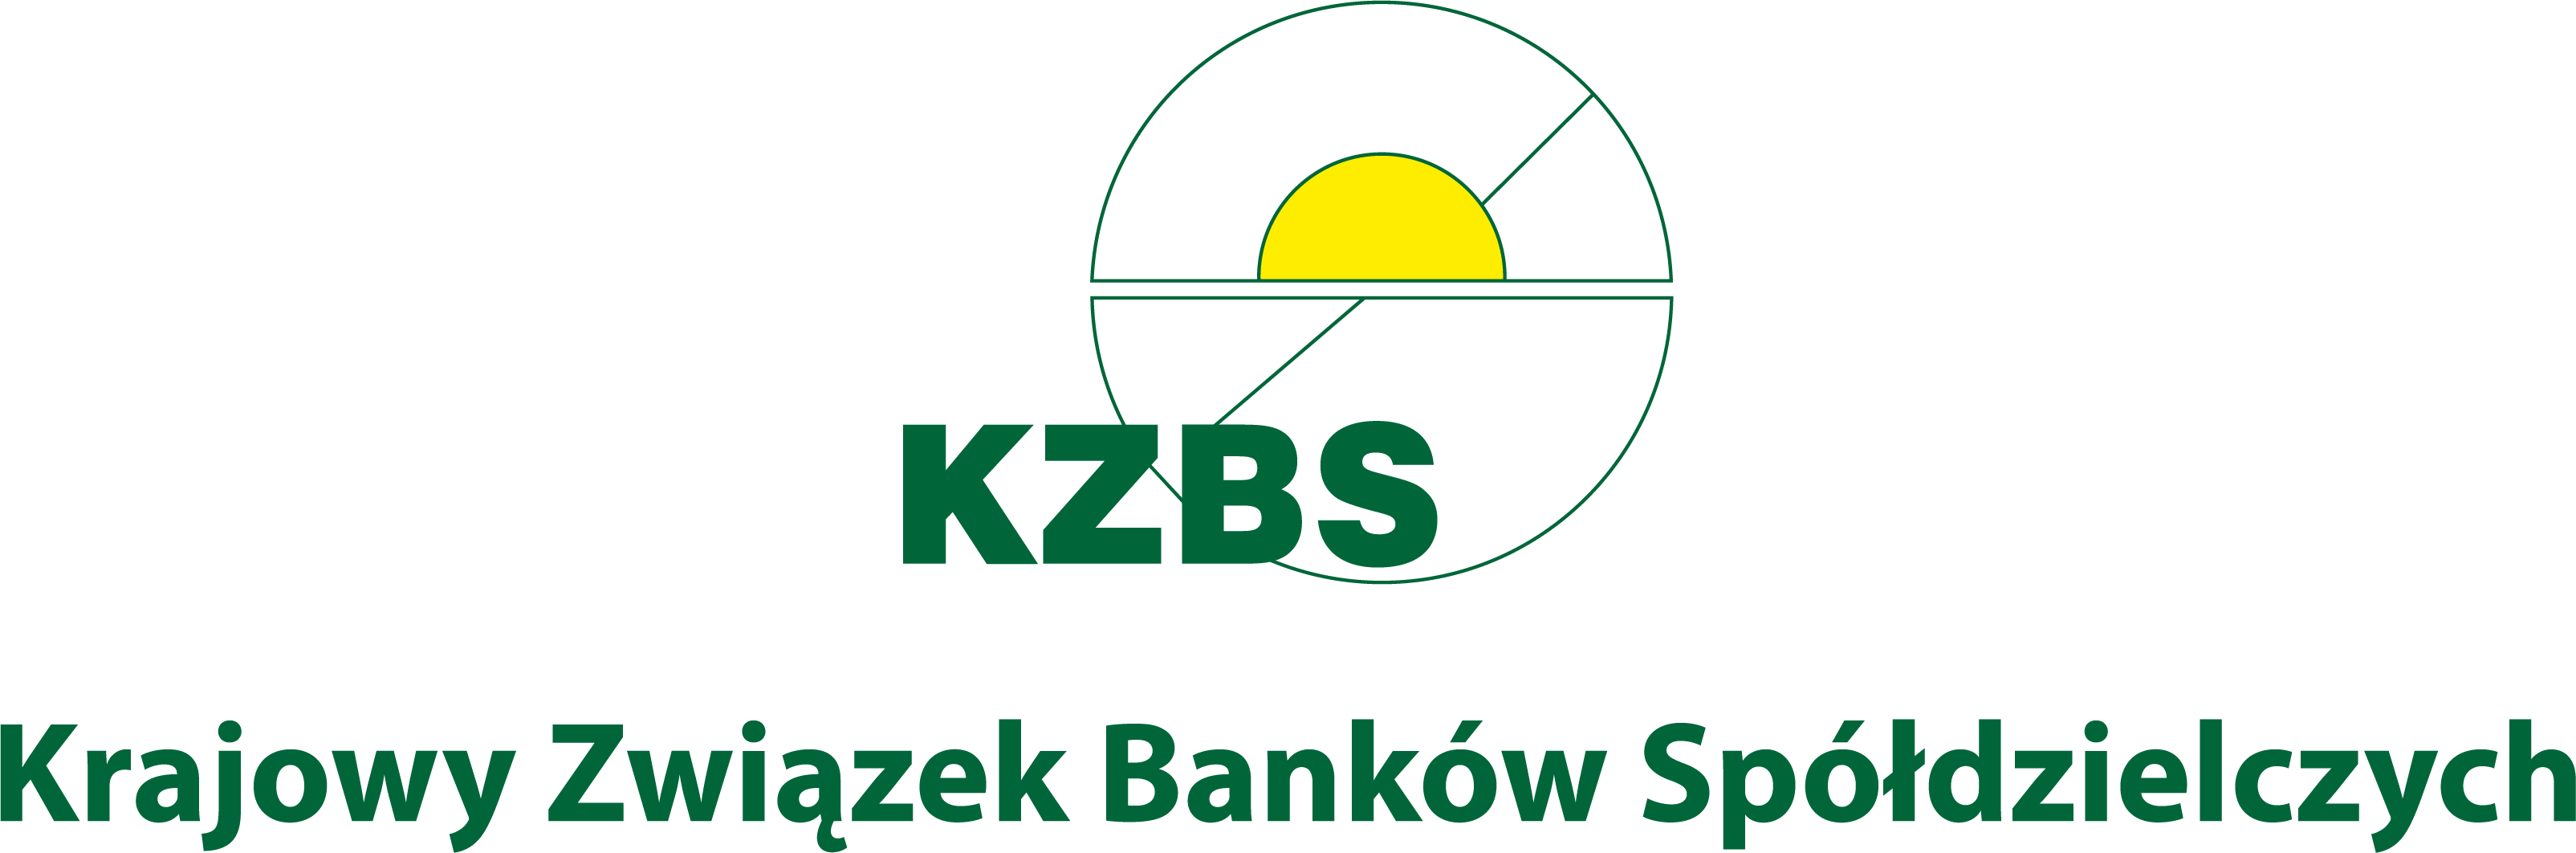 logo KZBS